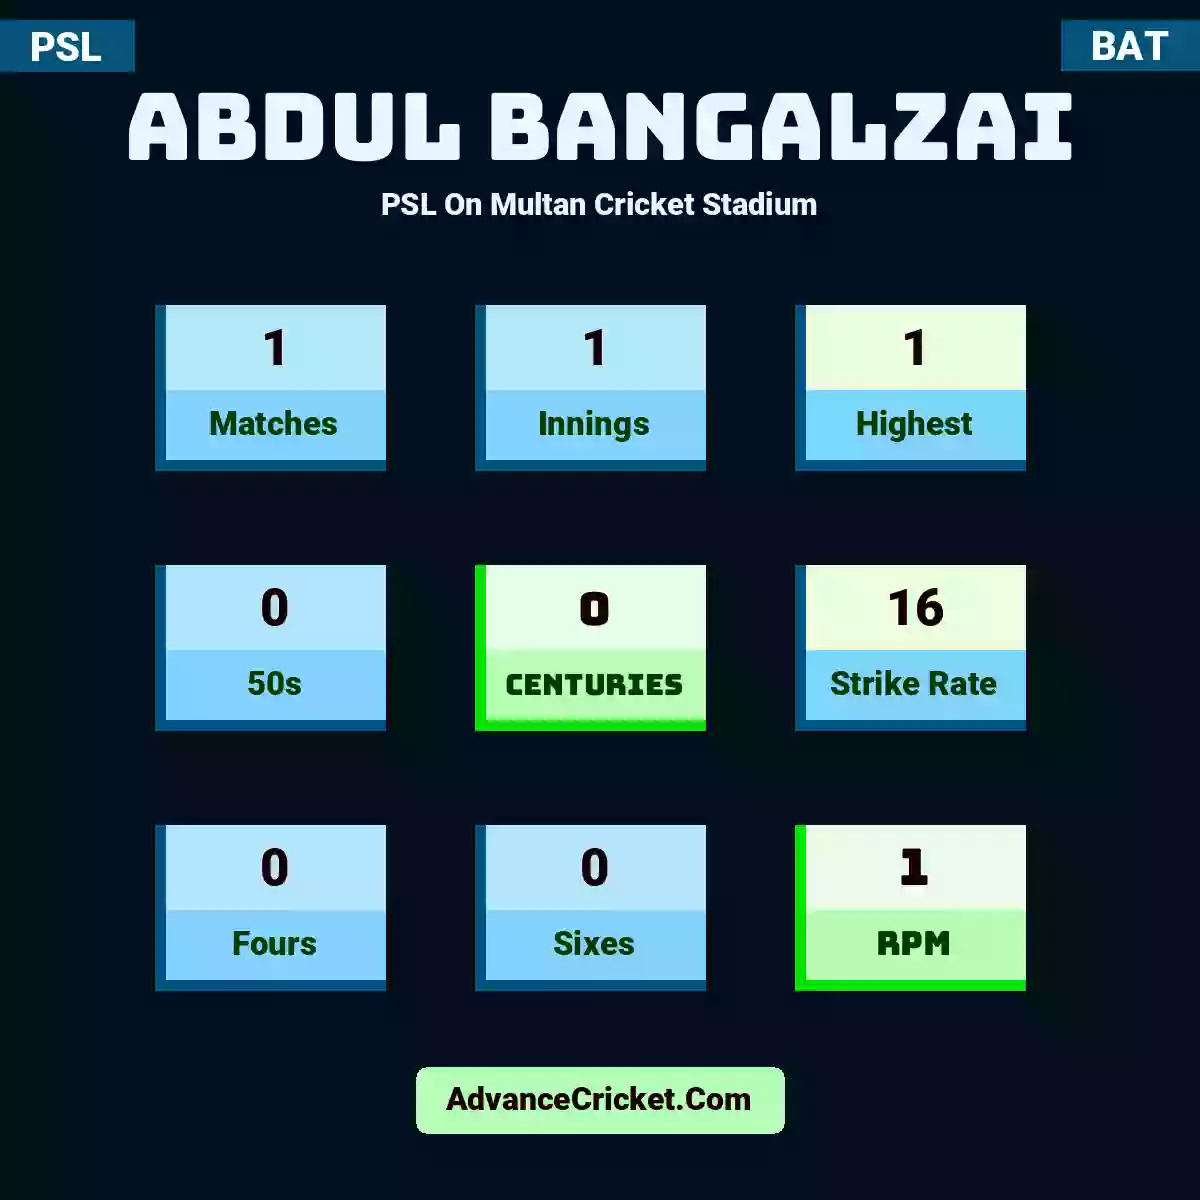 Abdul Bangalzai PSL  On Multan Cricket Stadium, Abdul Bangalzai played 1 matches, scored 1 runs as highest, 0 half-centuries, and 0 centuries, with a strike rate of 16. A.Bangalzai hit 0 fours and 0 sixes, with an RPM of 1.